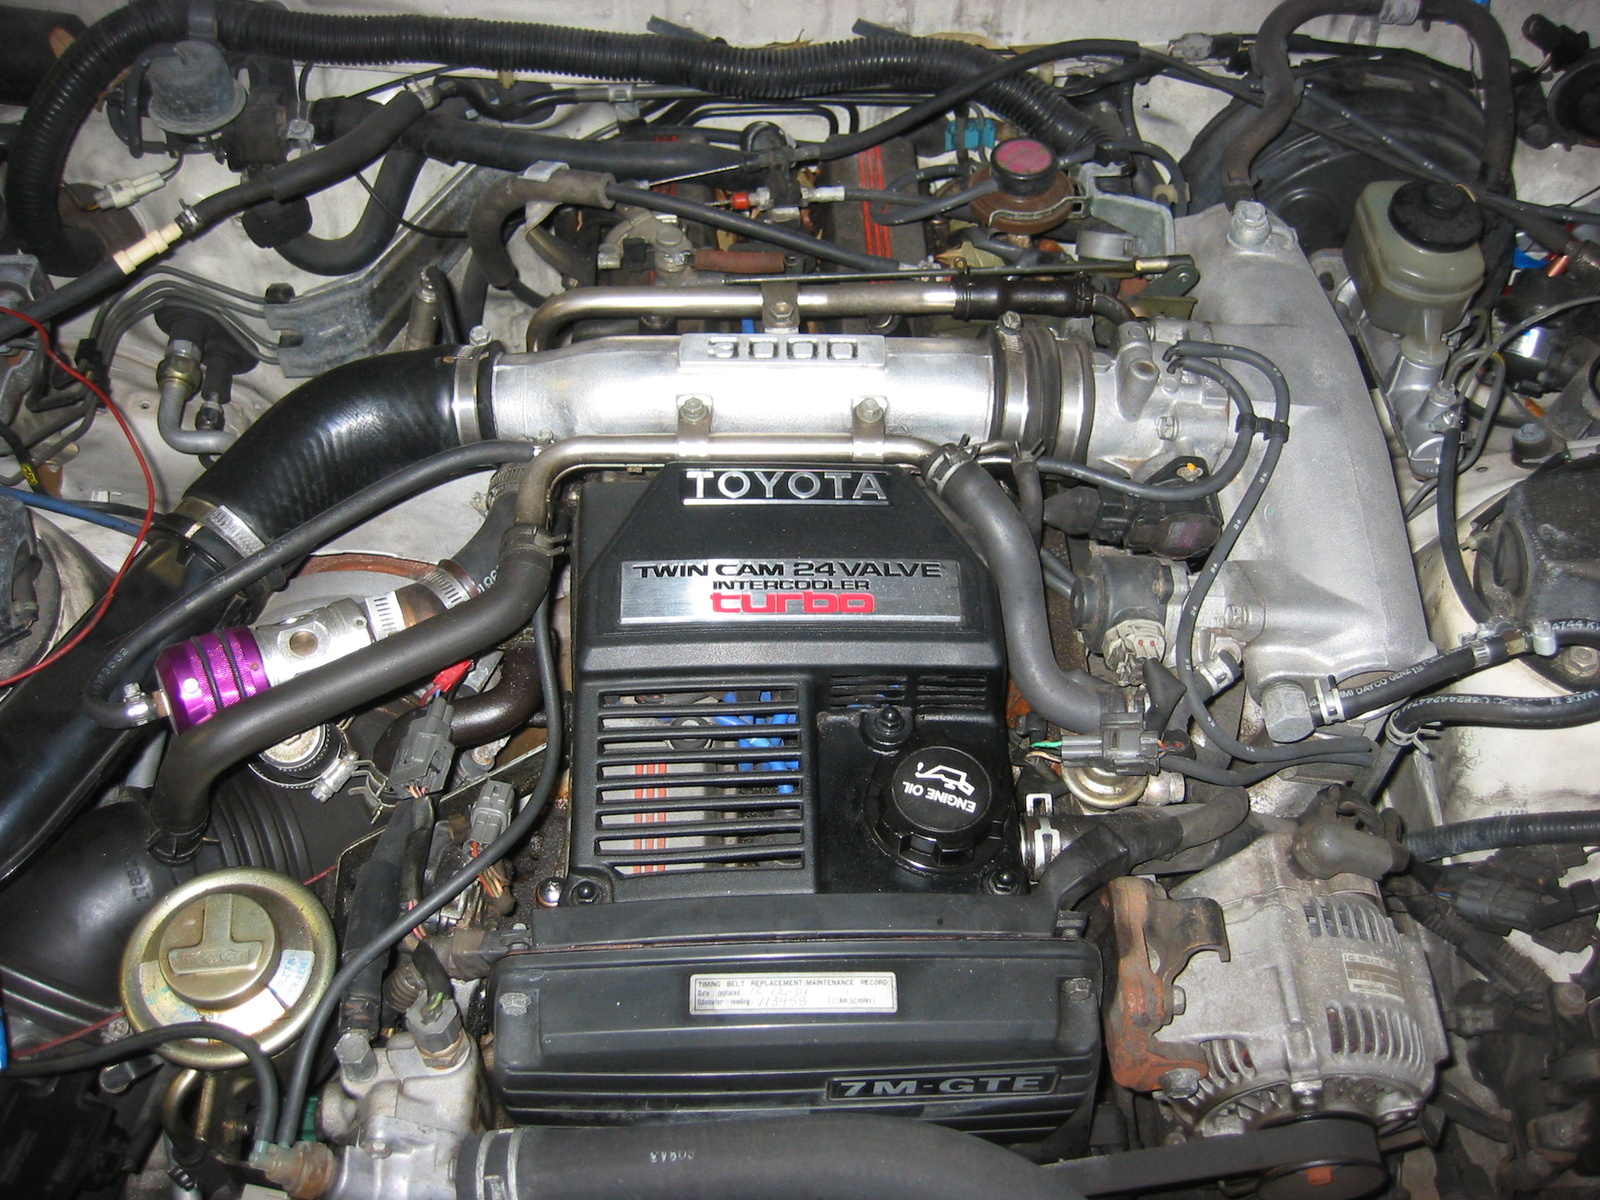 1990 Toyota supra engine specs